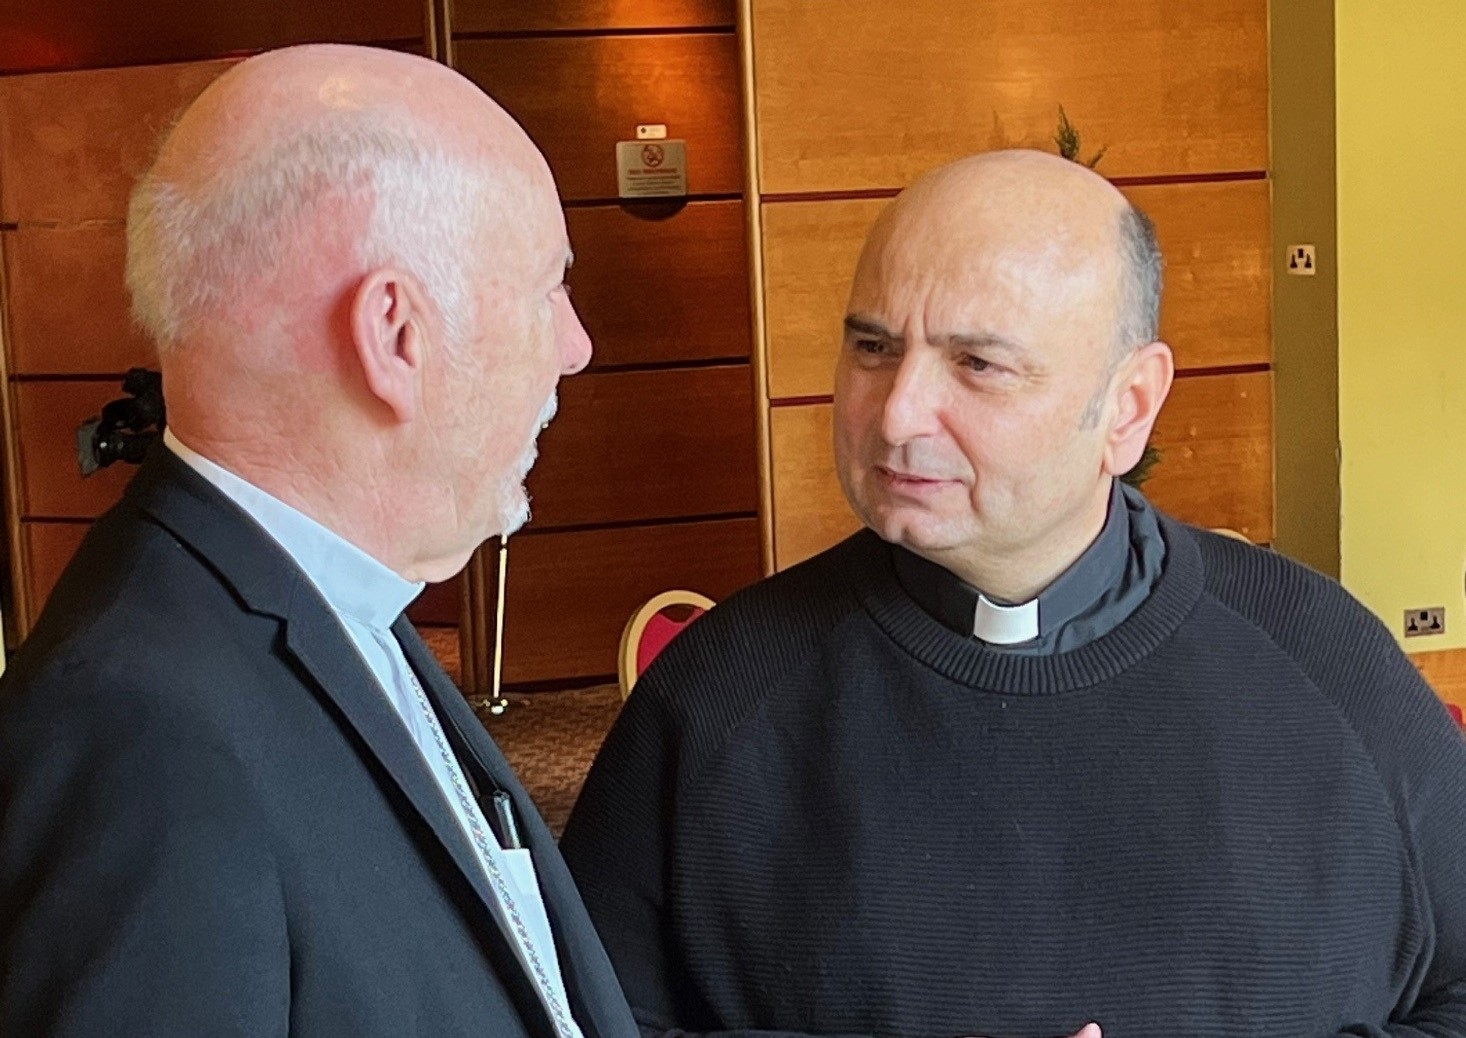 Gaza Priest's Glasgow visit